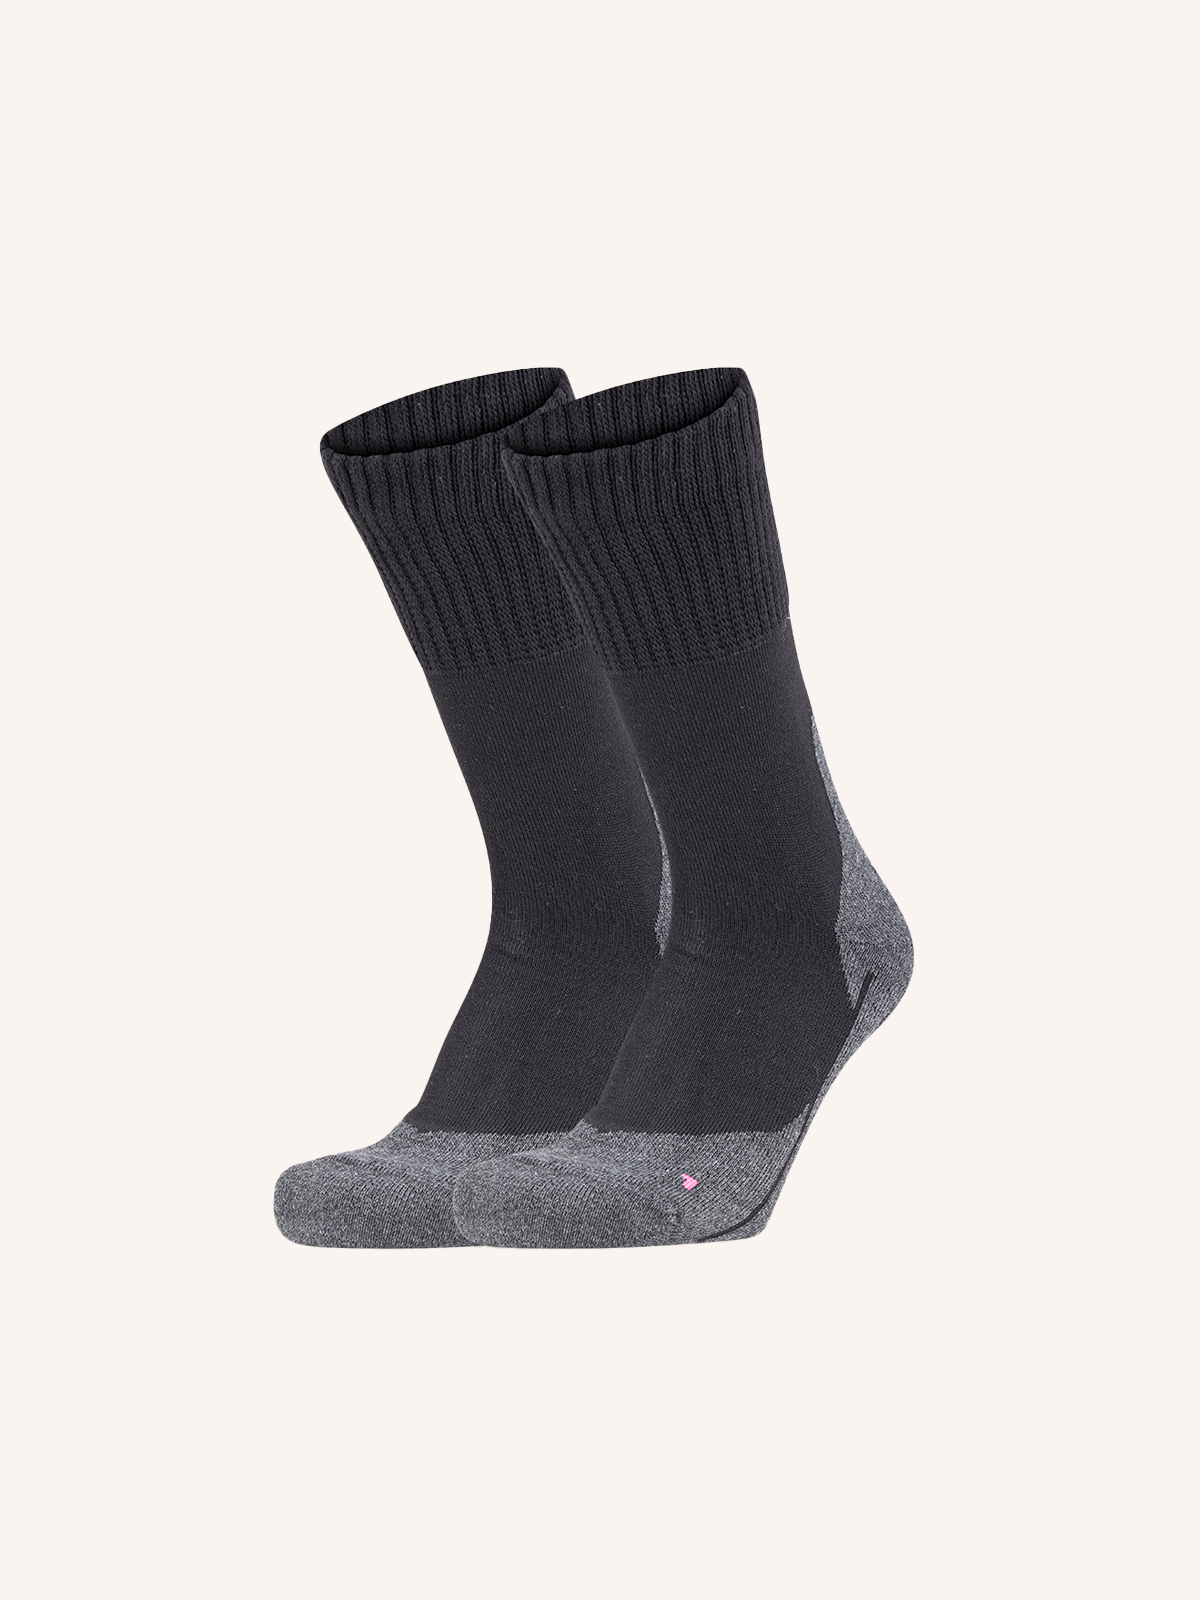 Short Cotton Socks for Women for Trekking | Plain Color | Pack of 2 Pairs | PRS PRO 04D